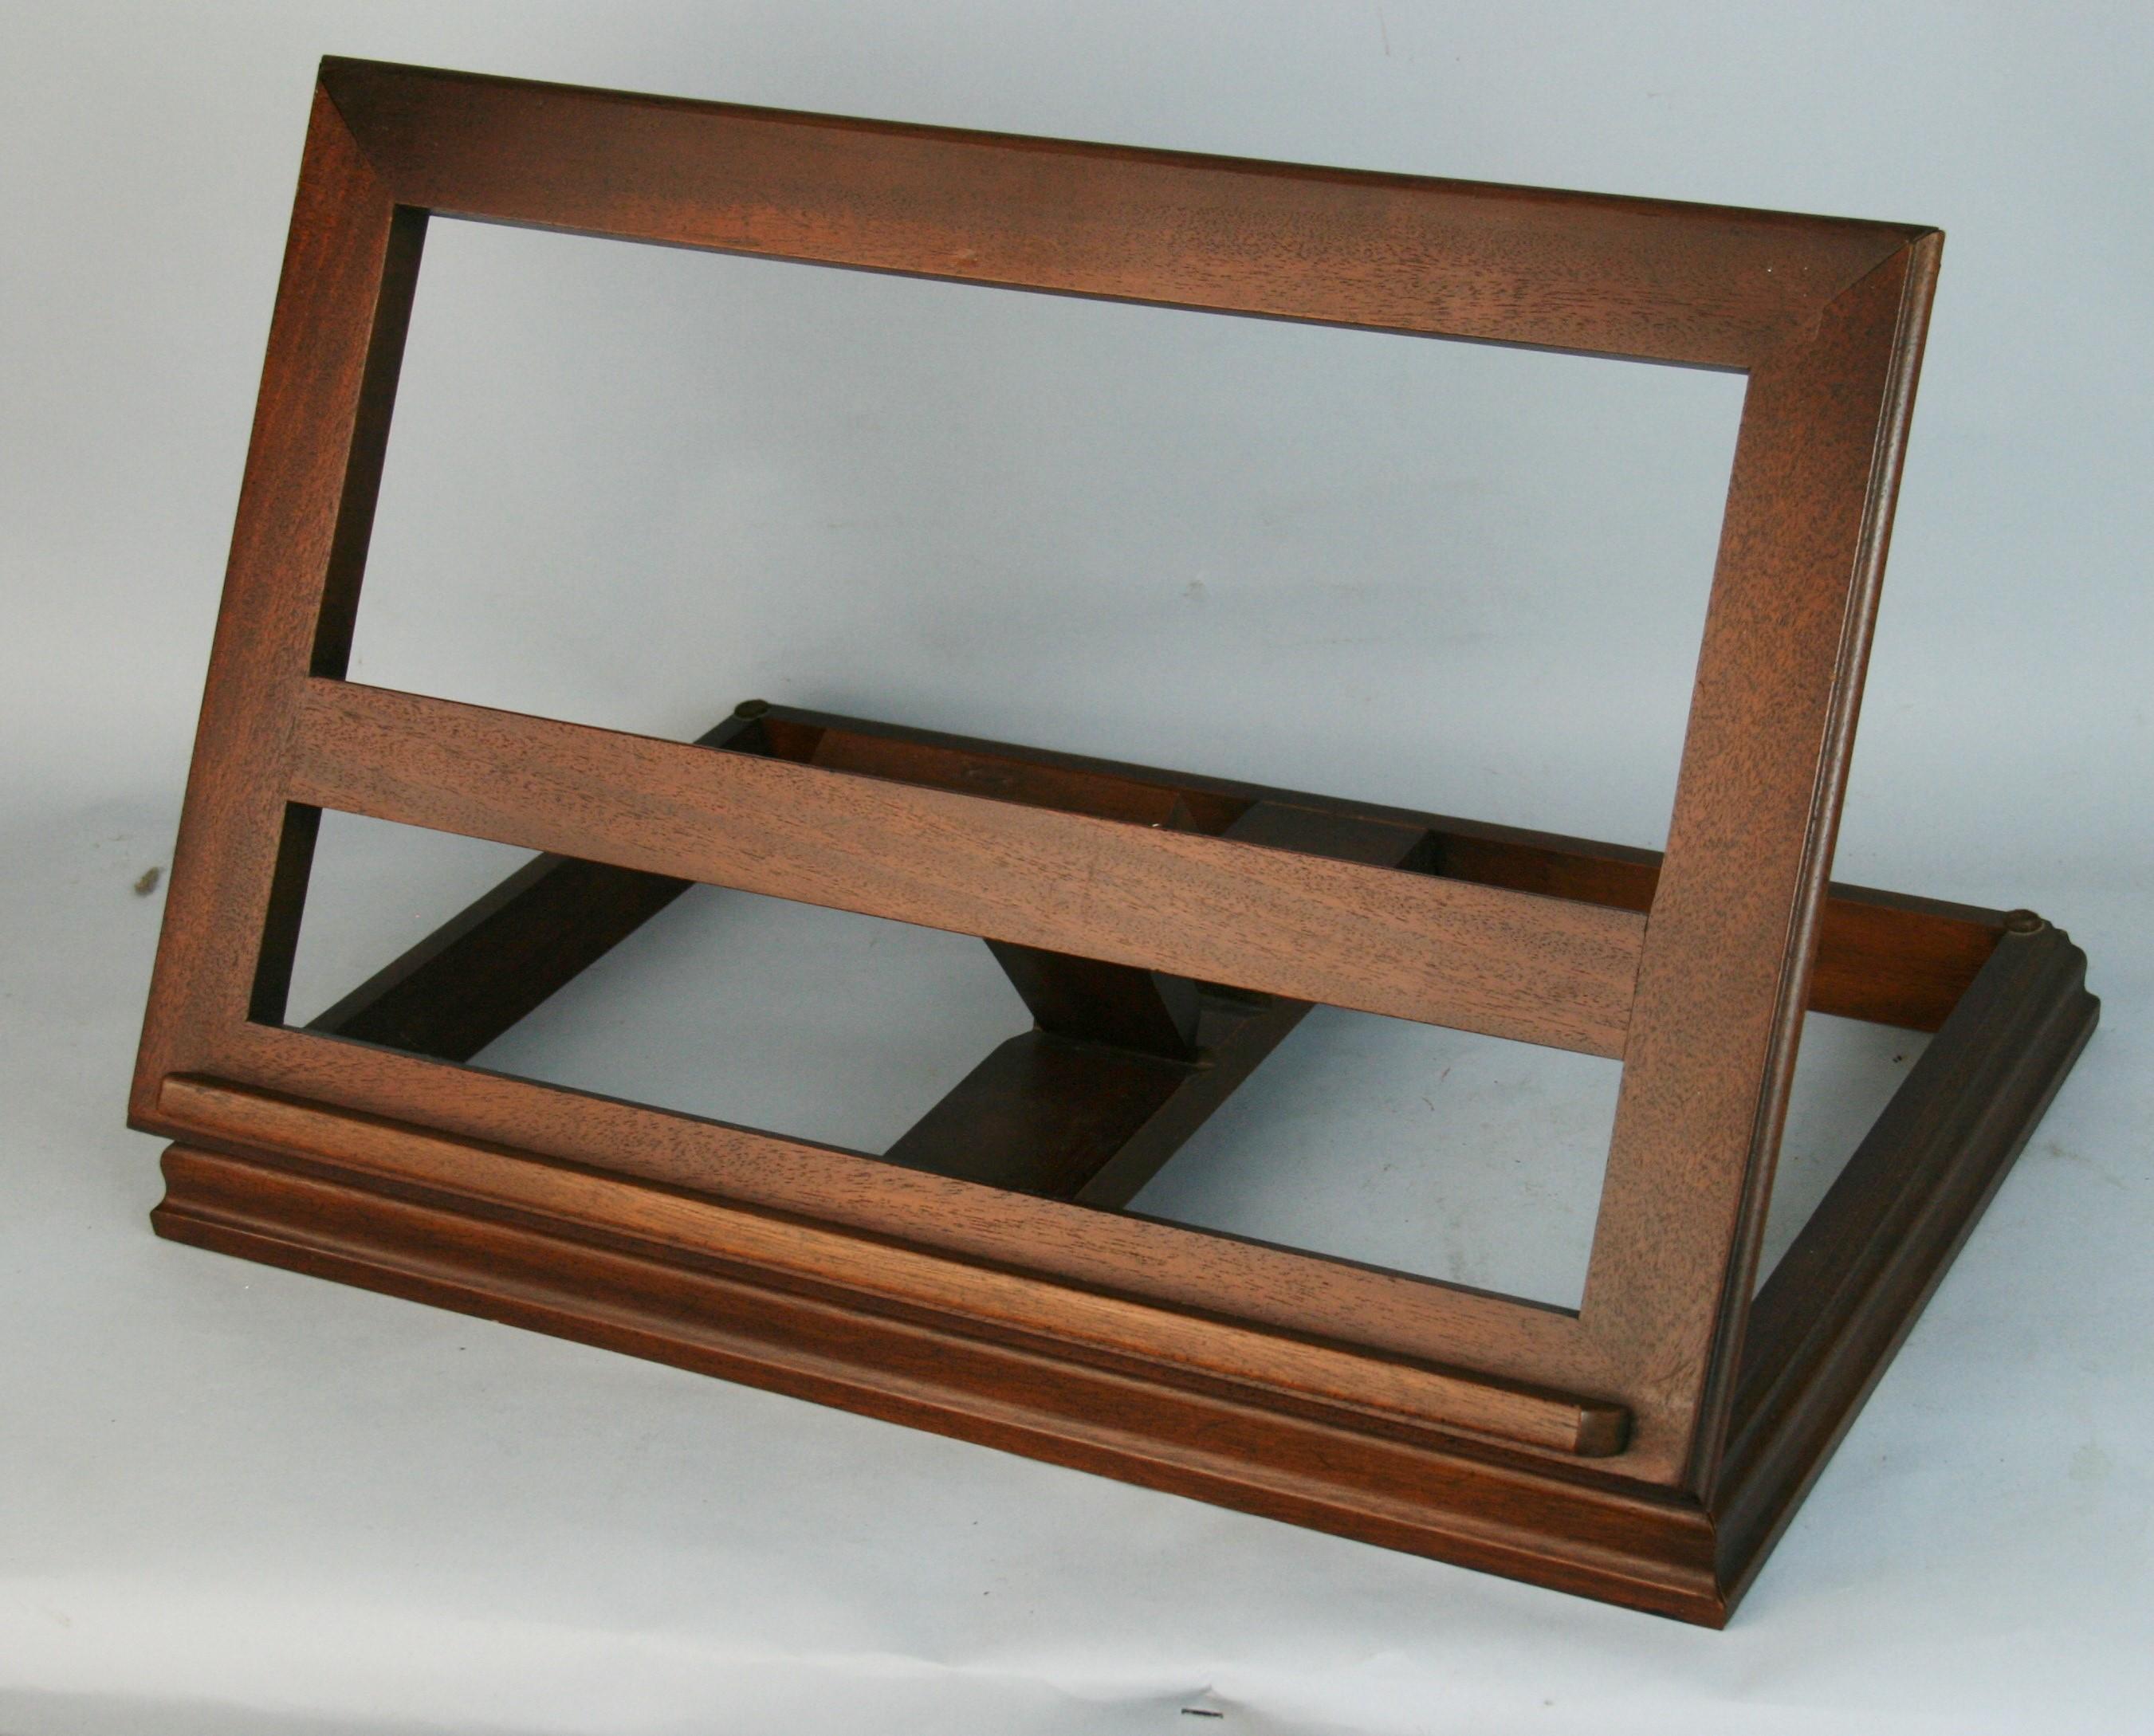 1342 Adjustable walnut wood book rack by Drexel Furniture.